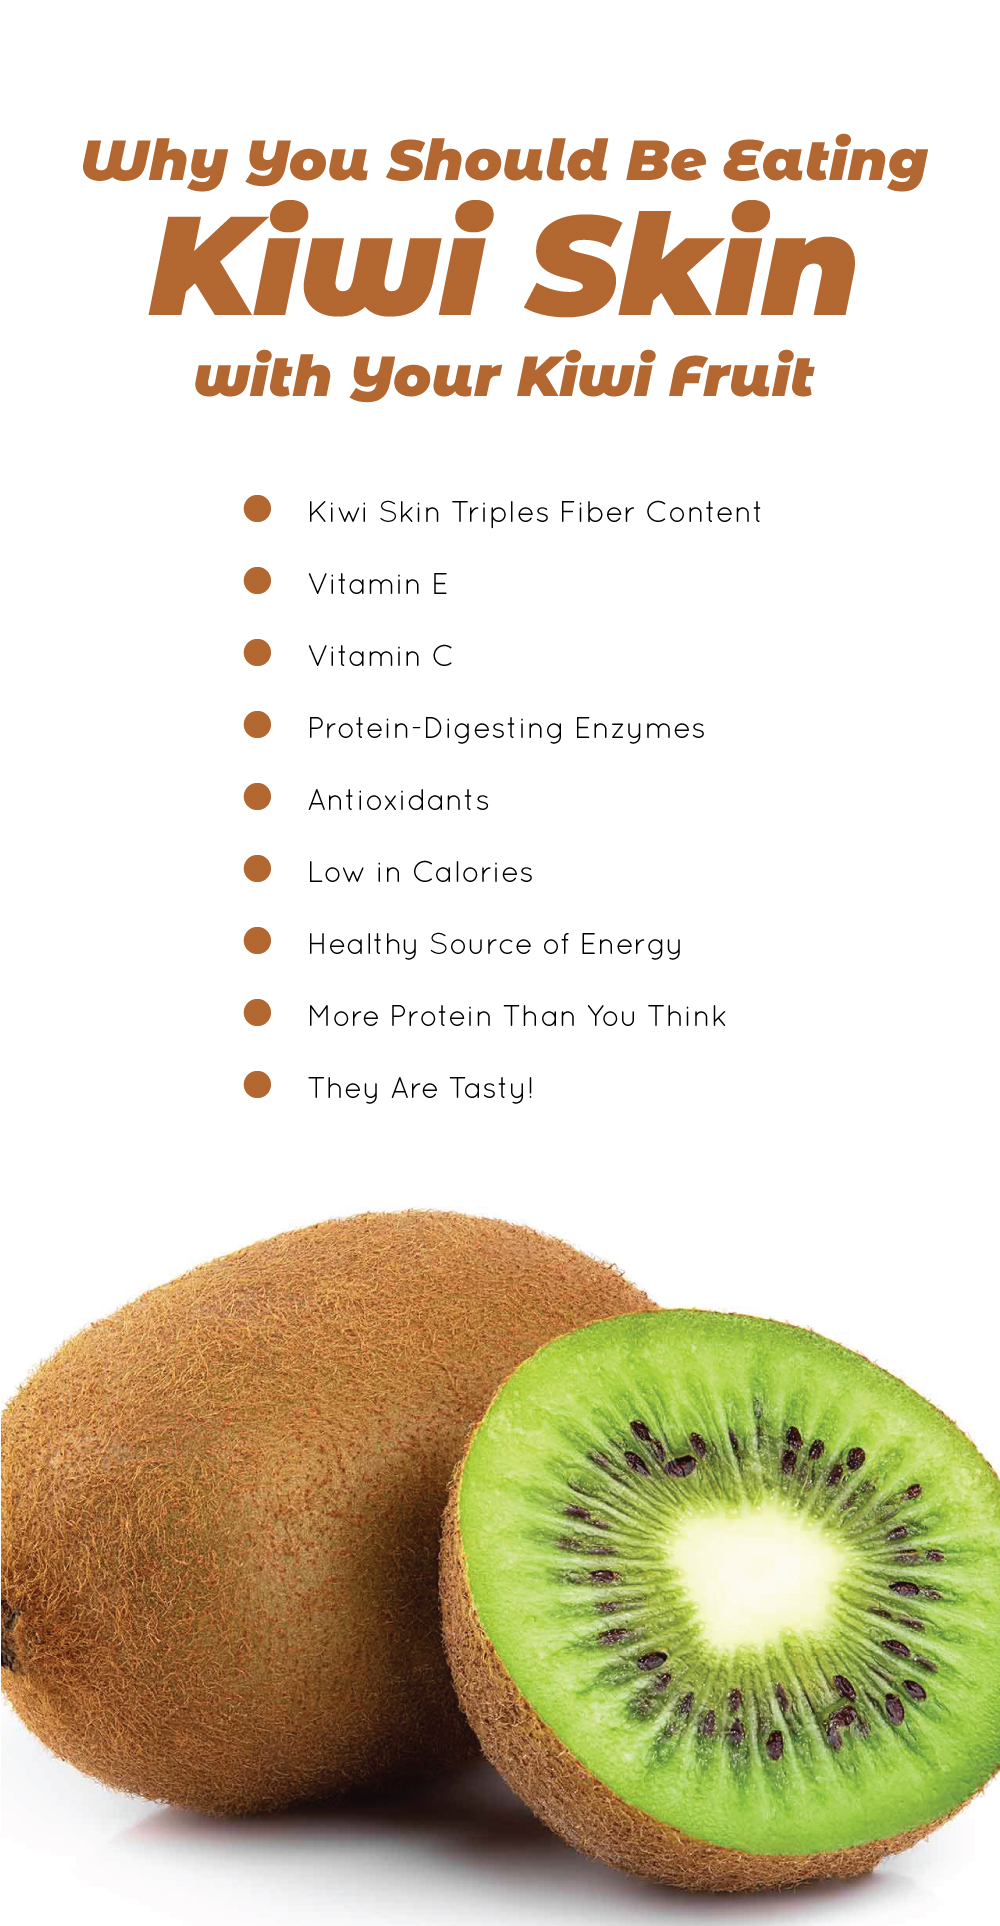 Why You Should Be Eating Kiwi Skin with Your Kiwi Fruit